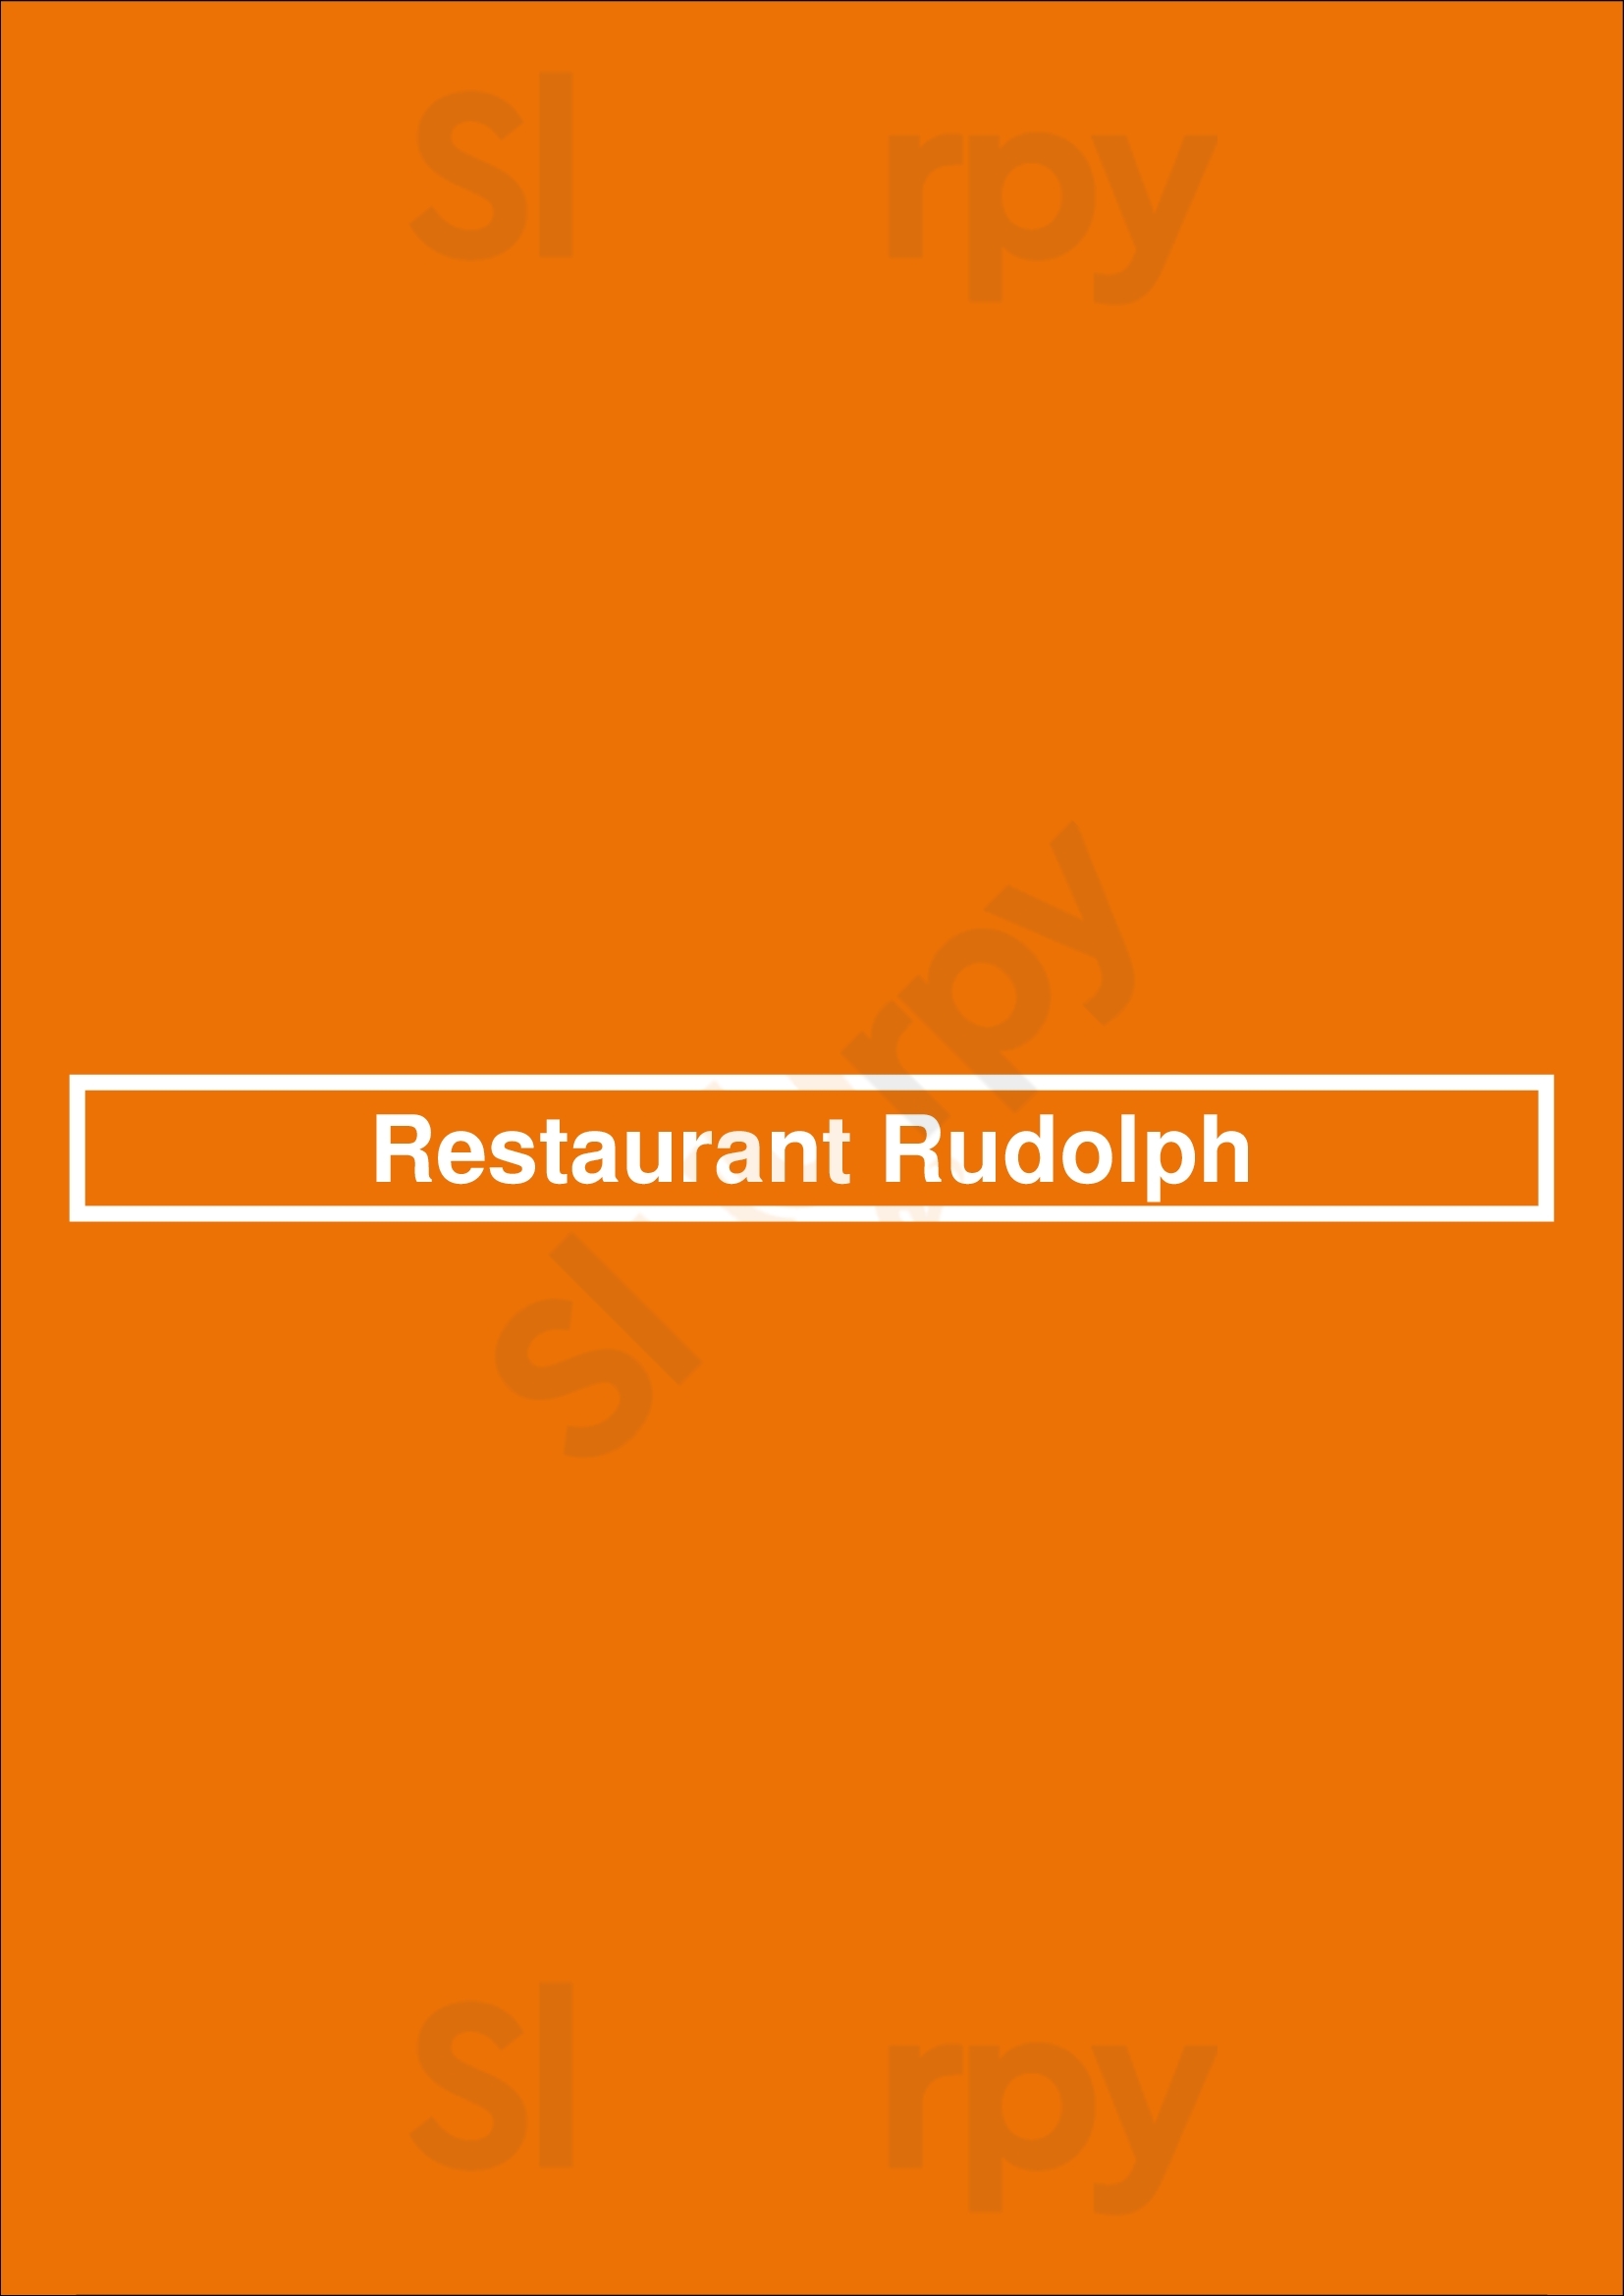 Restaurant Rudolph Hamburg Menu - 1